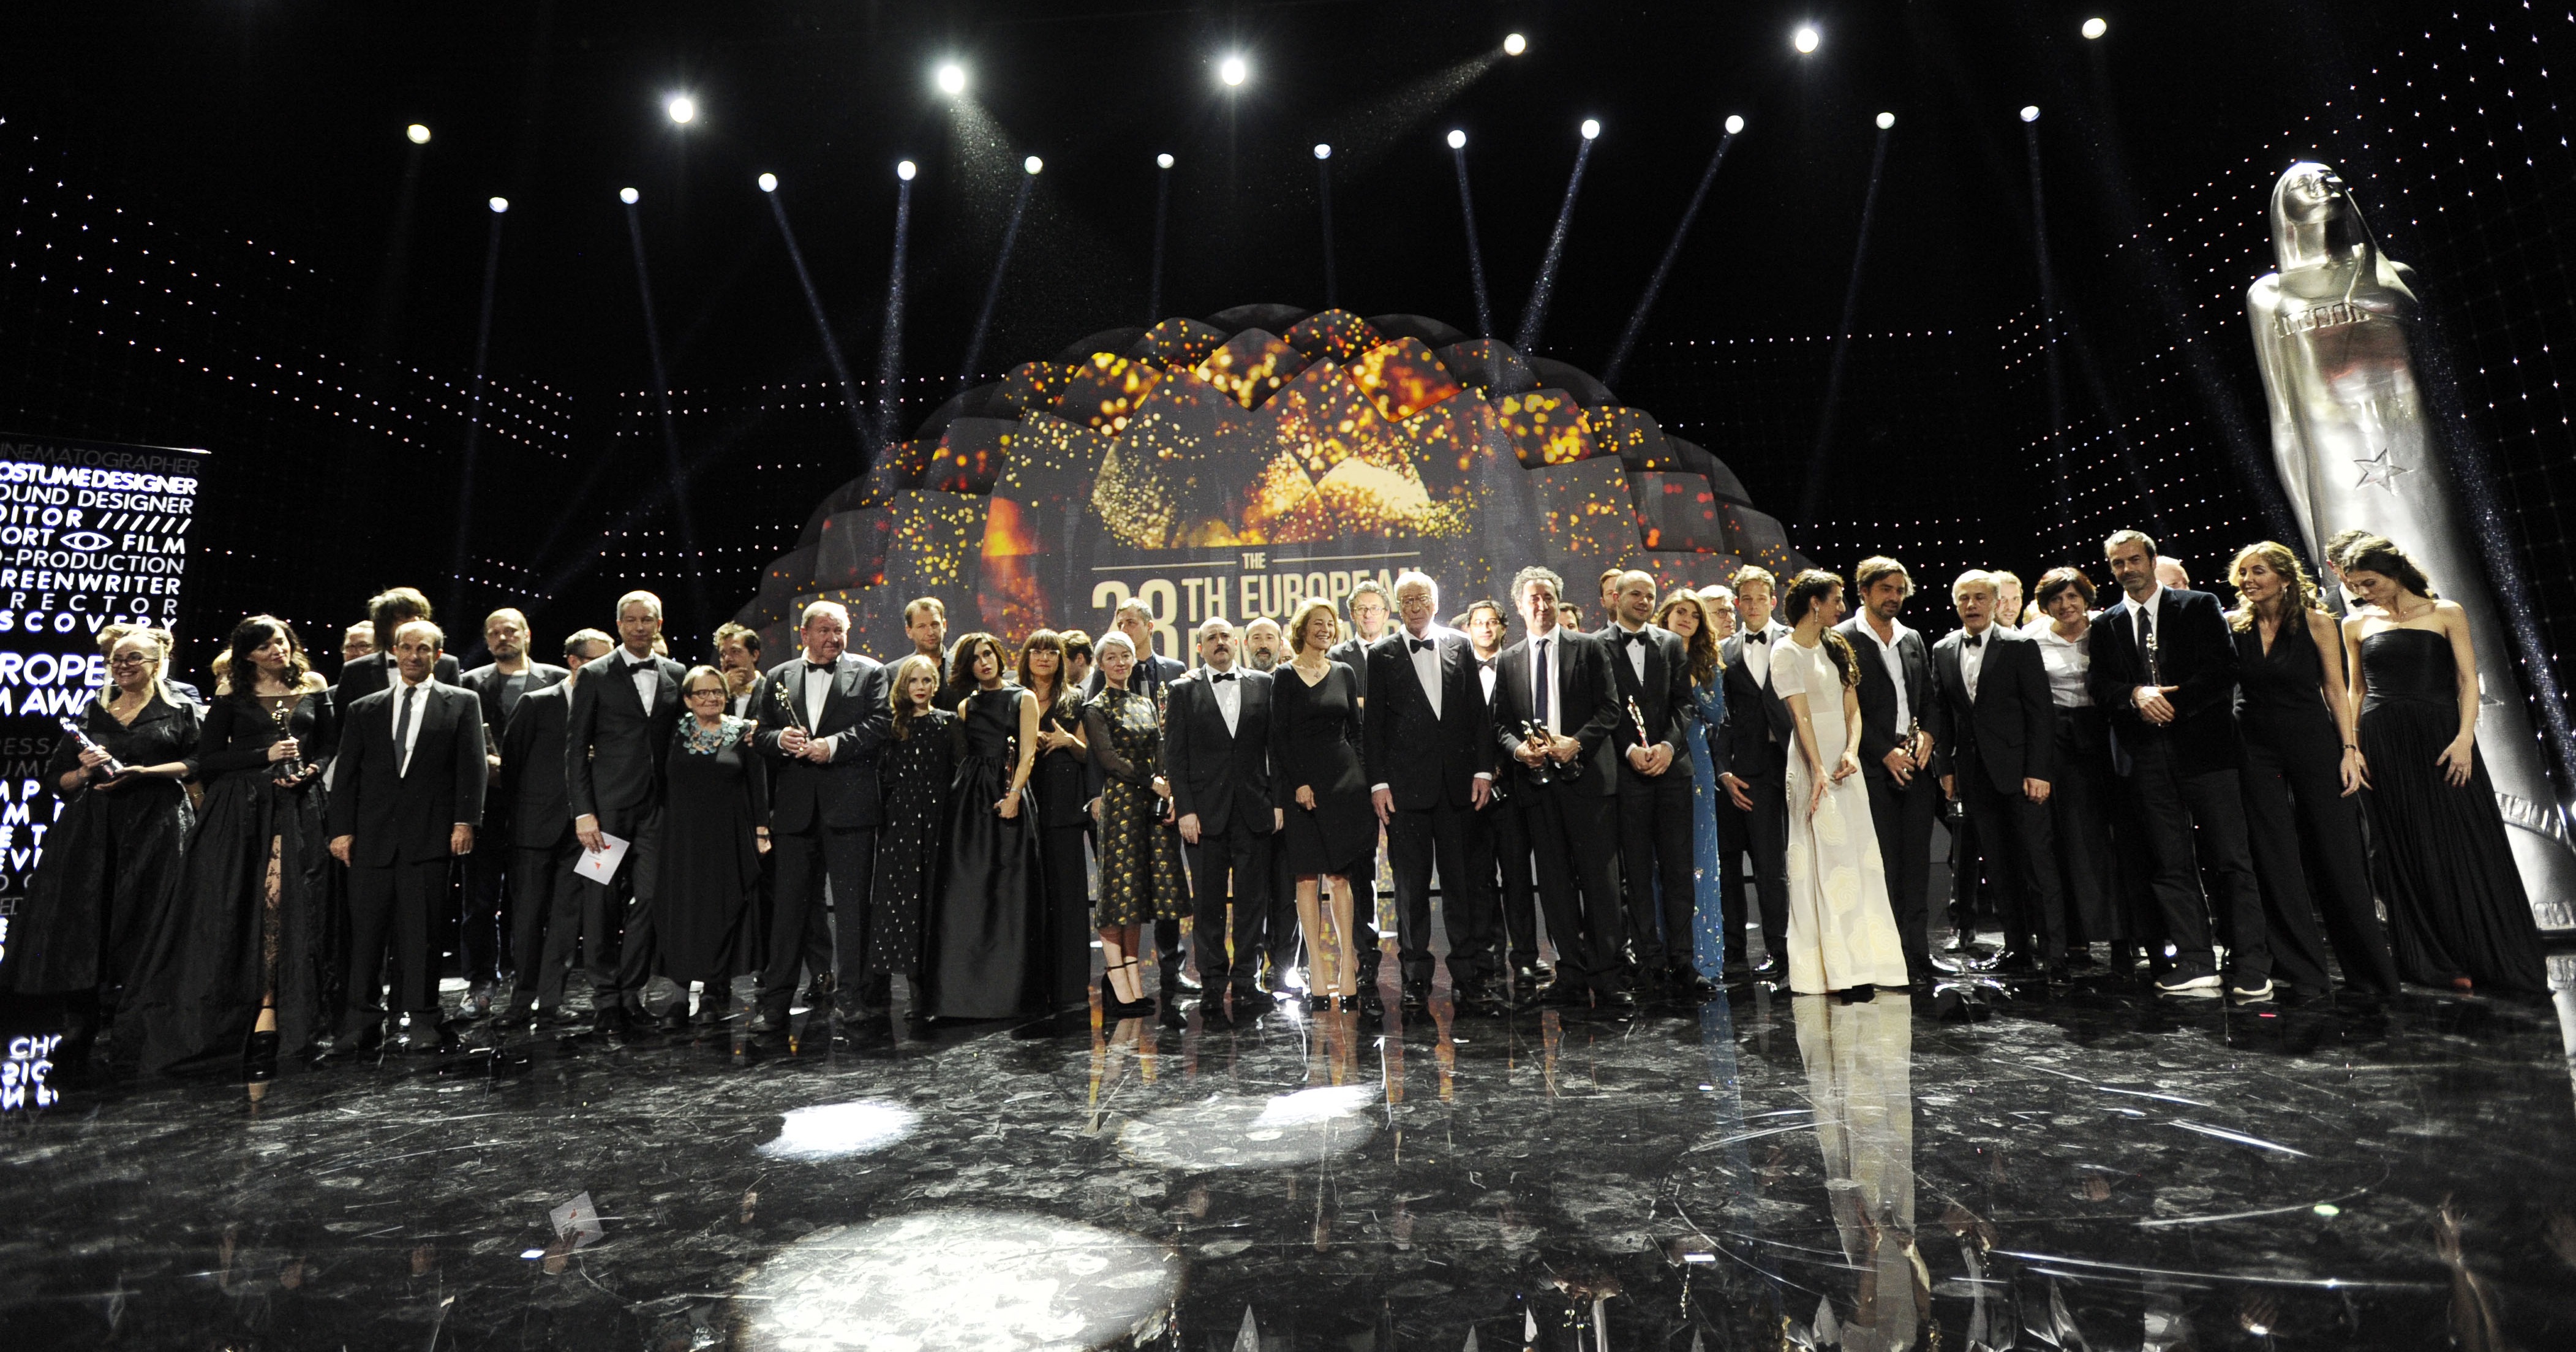 The 28th European Film Awards Ceremony & Winners